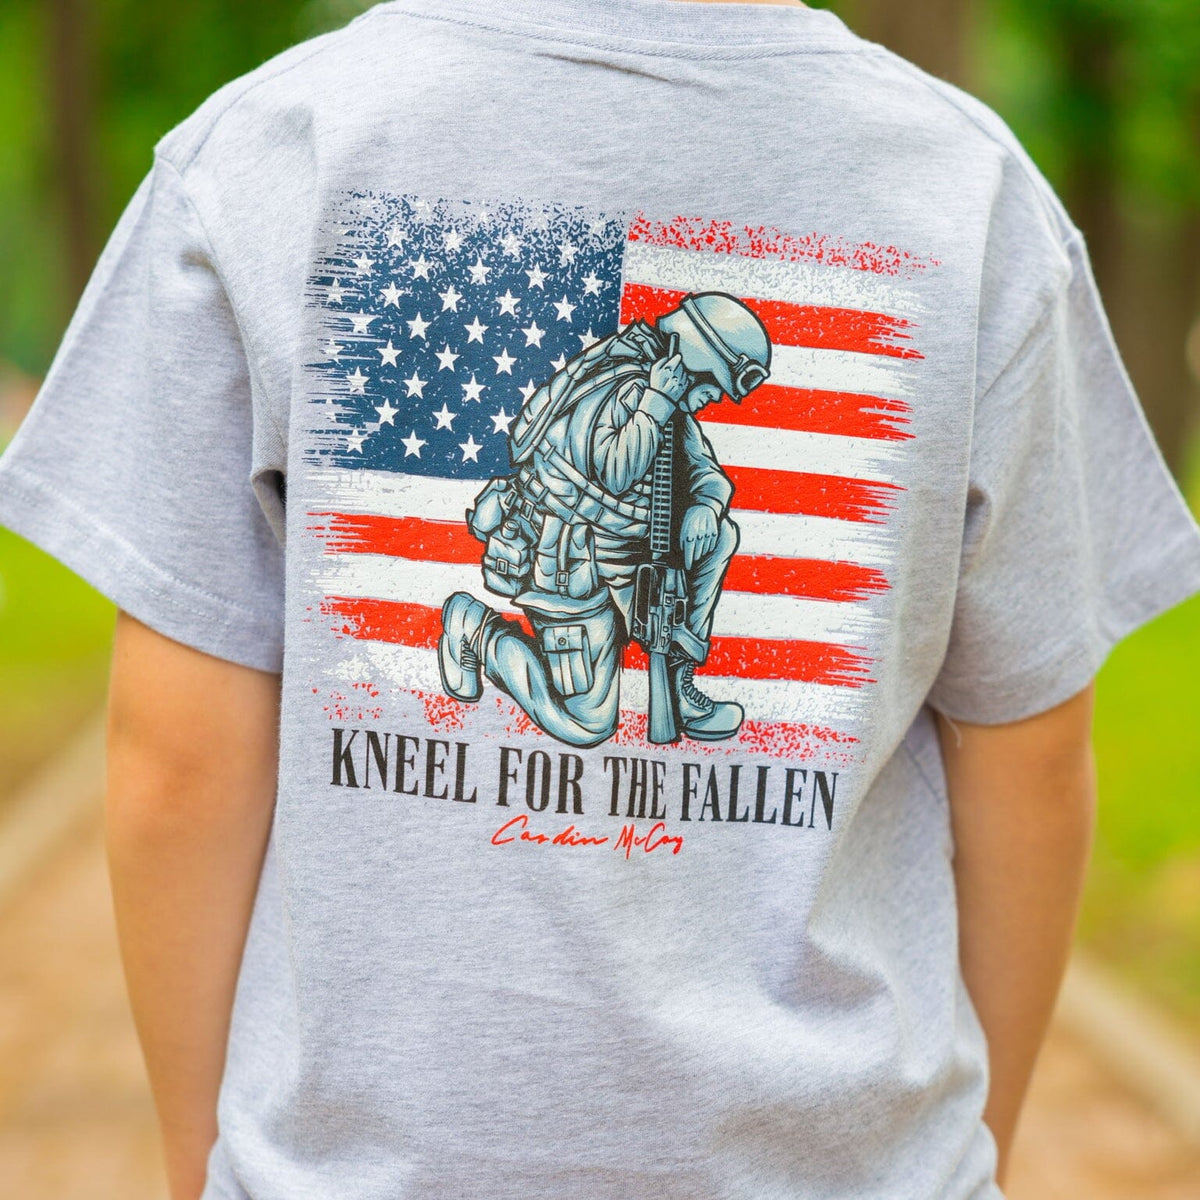 Boys' Kneel For the Fallen Short-Sleeve Tee Short Sleeve T-Shirt Cardin McCoy 